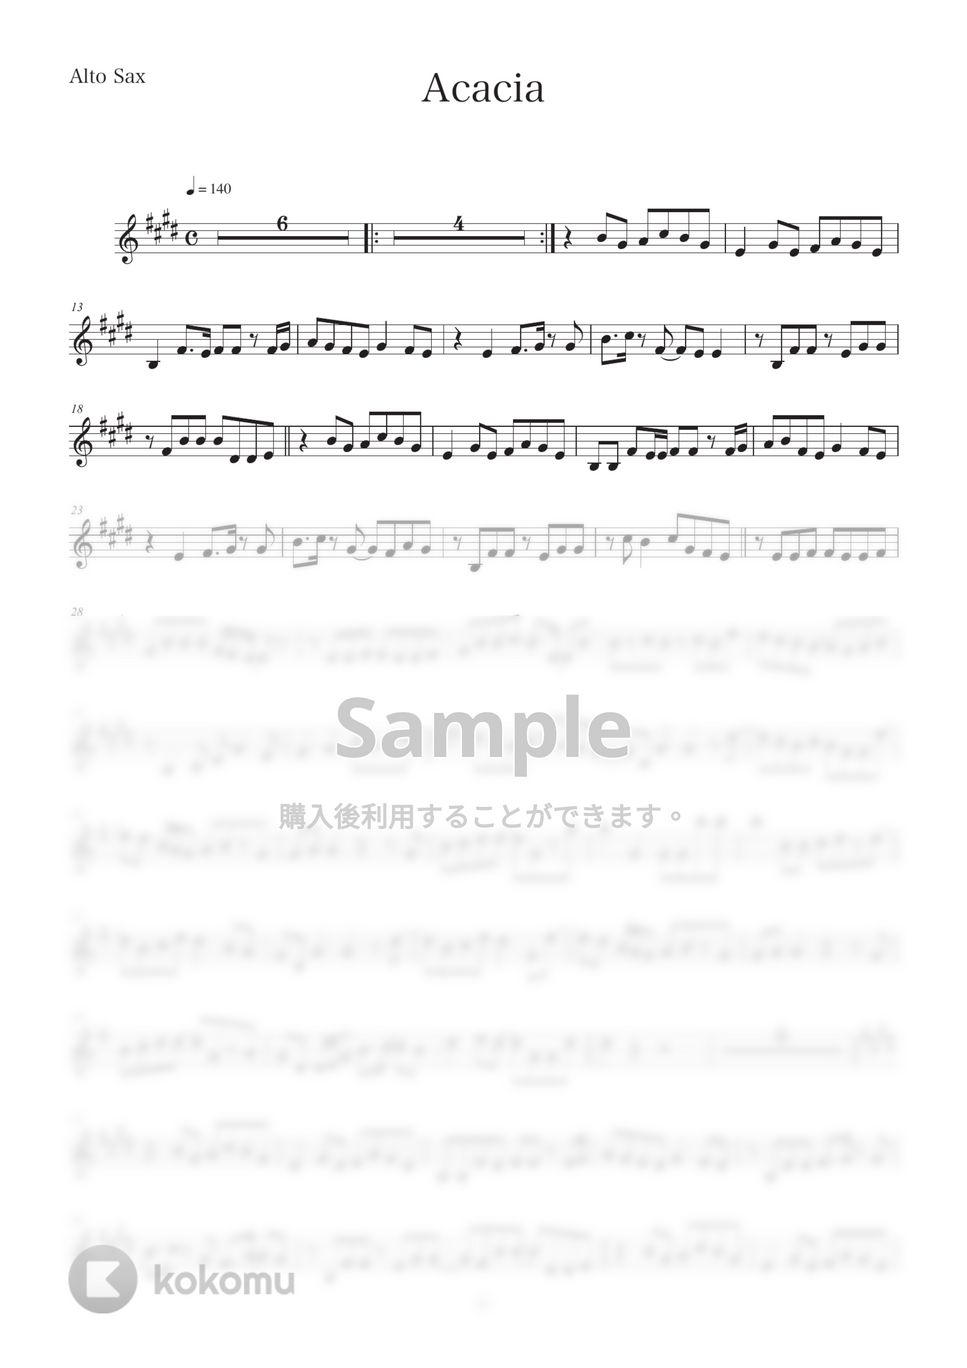 BUMP OF CHICKEN - アカシア(inE♭) (オクターブ下げVer.) by HiRO Sax